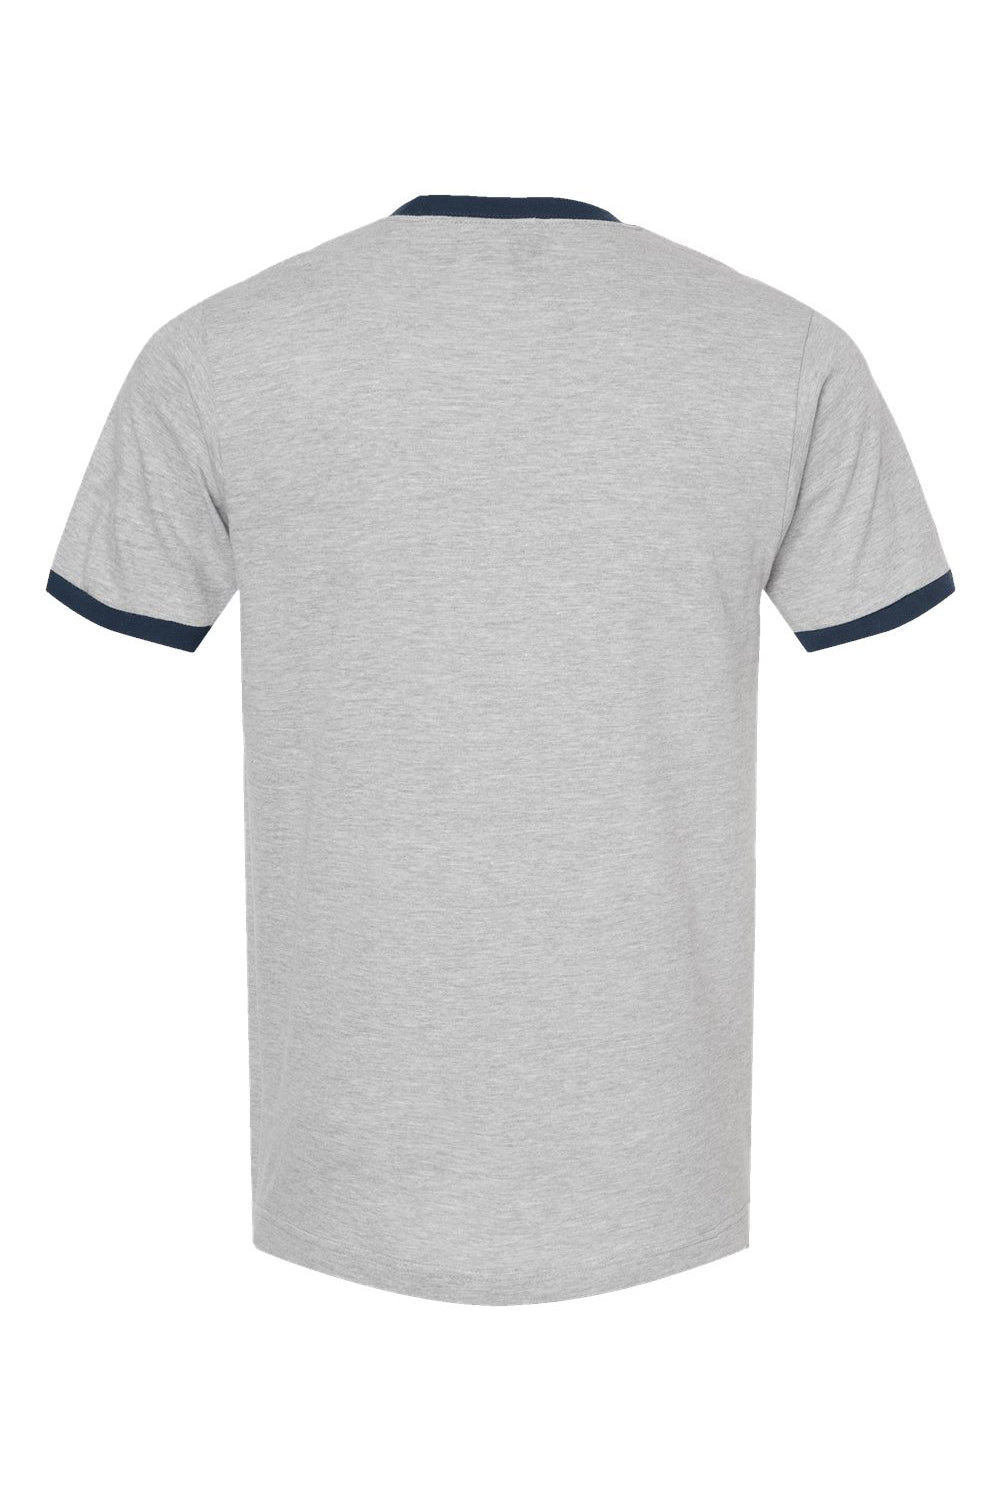 Tultex 246 Mens Fine Jersey Ringer Short Sleeve Crewneck T-Shirt Heather Grey/Navy Blue Flat Back